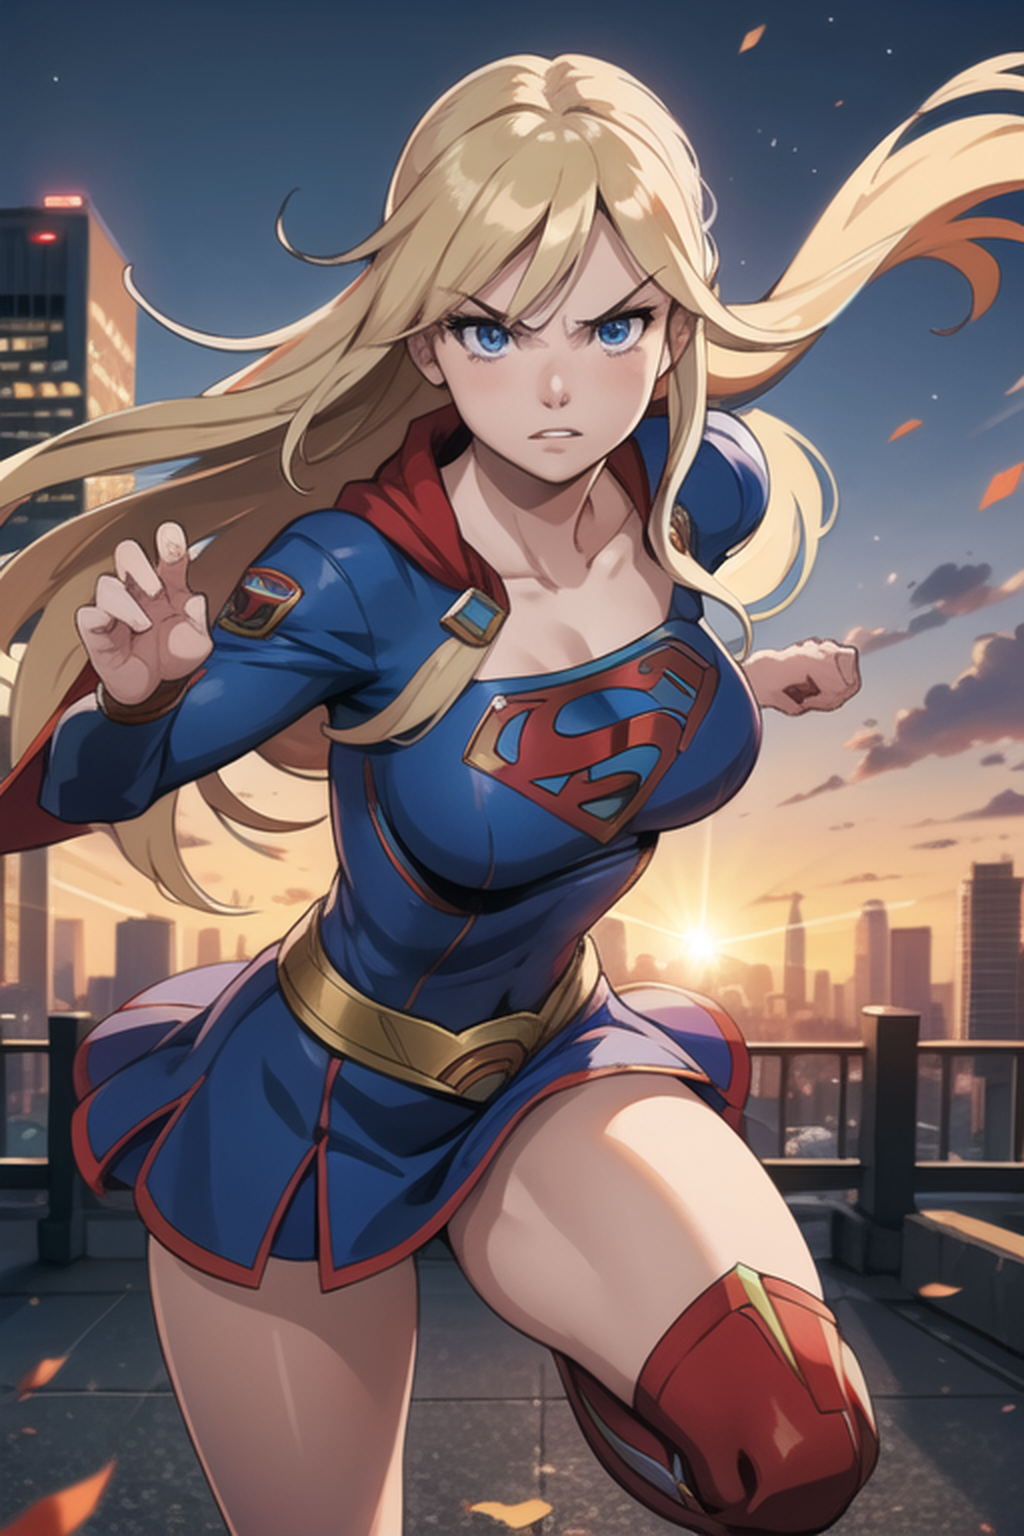 Anime Supergirl - 1 by ArgoCityArtworks on DeviantArt